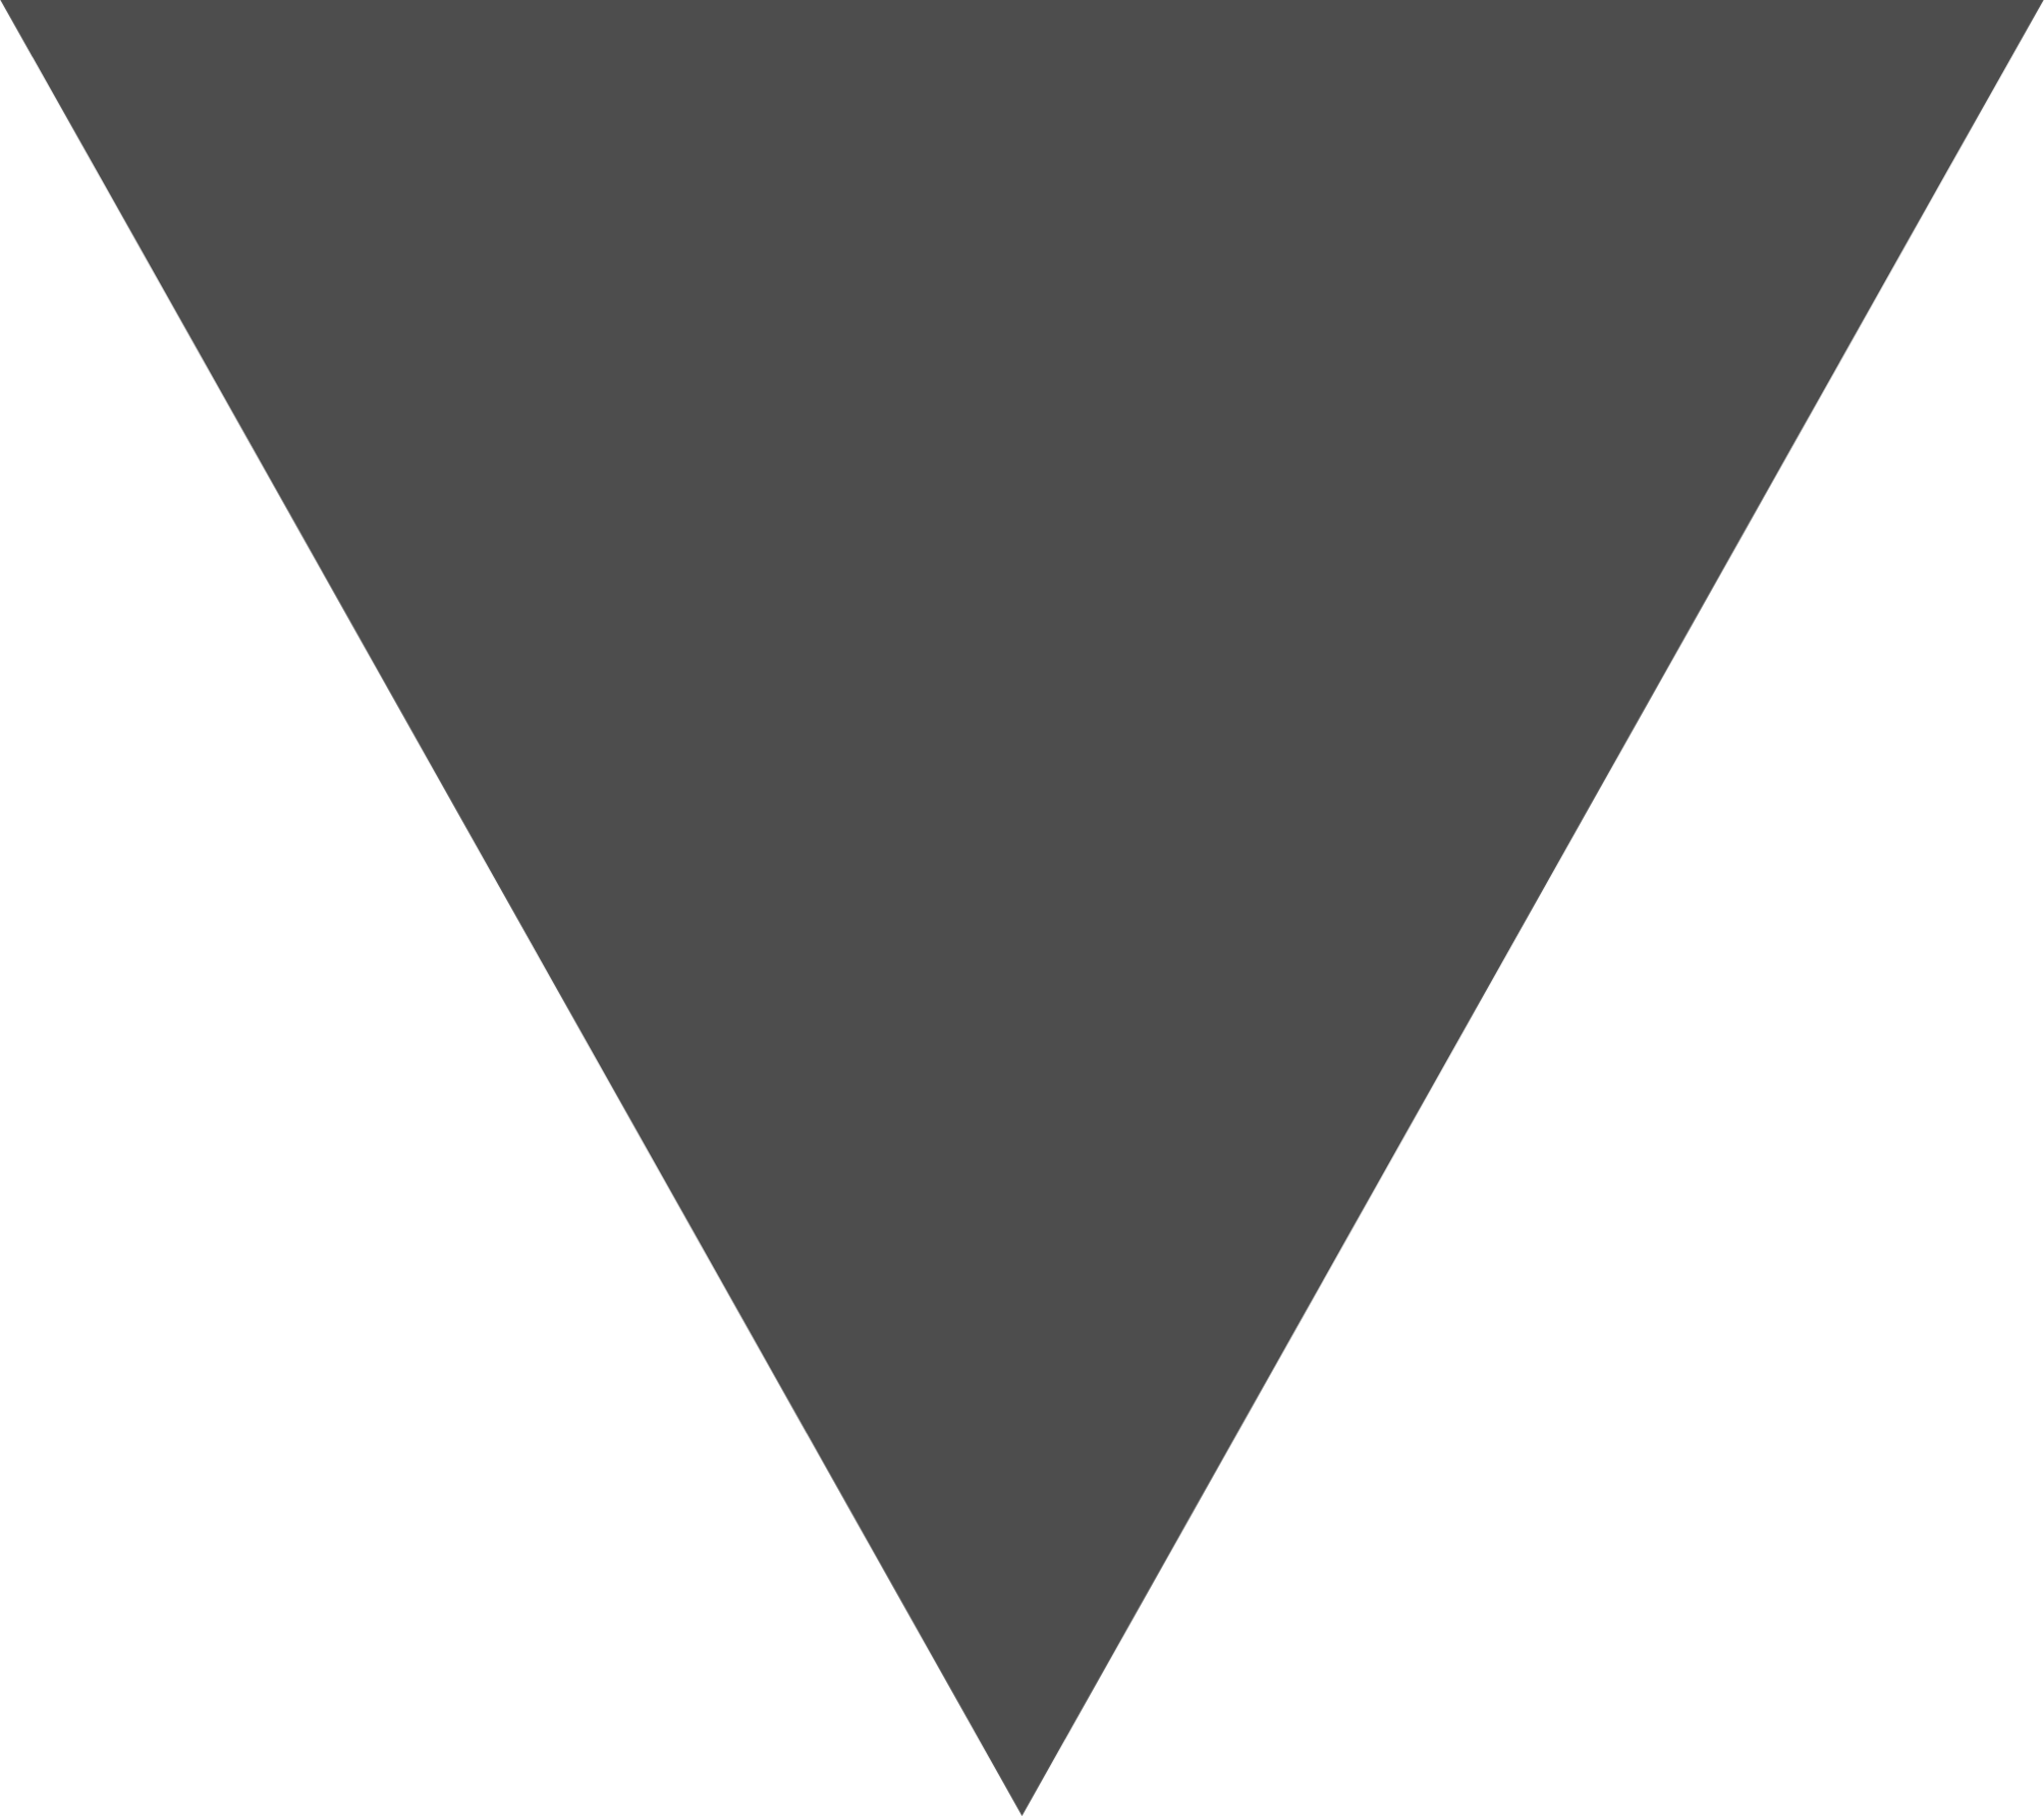 draw triangle4 icon